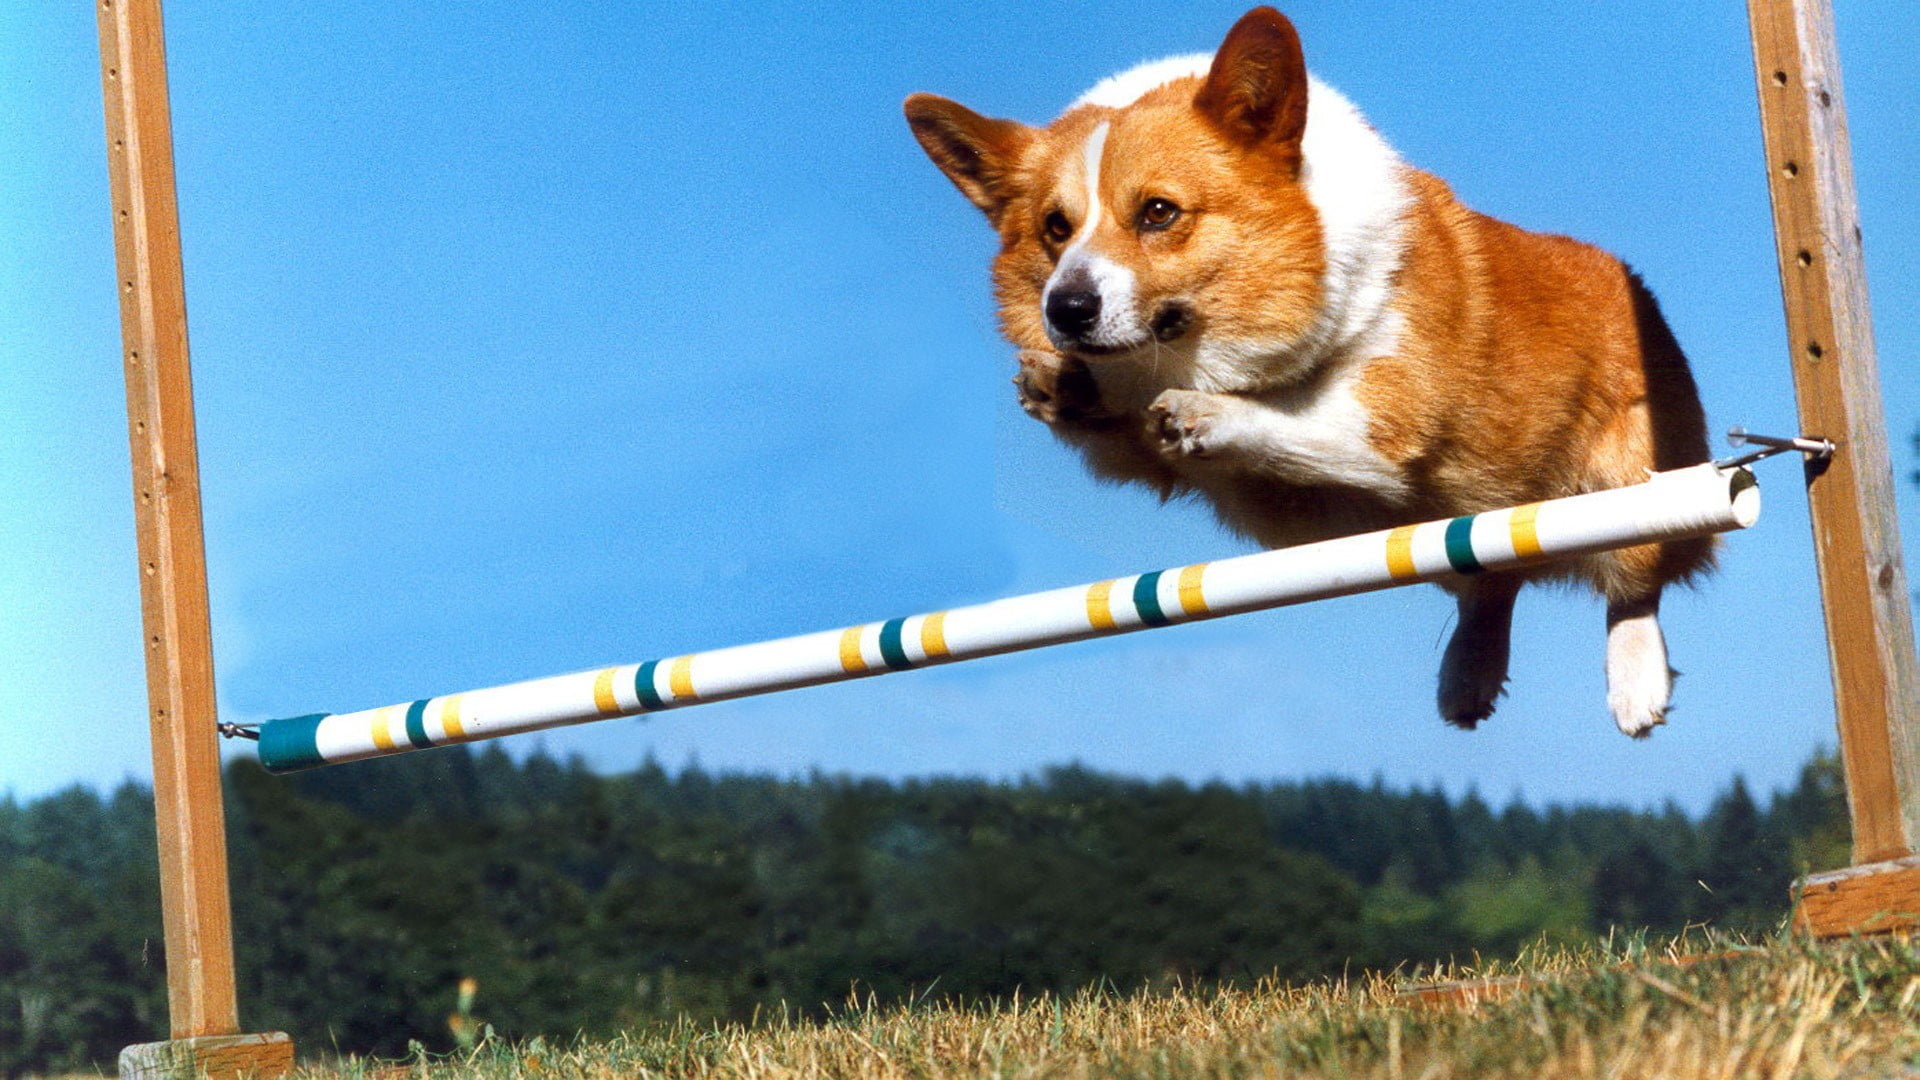 Dog Sports: Corgi in a jump, Winged Single Jump, Adjusted Height. 1920x1080 Full HD Background.